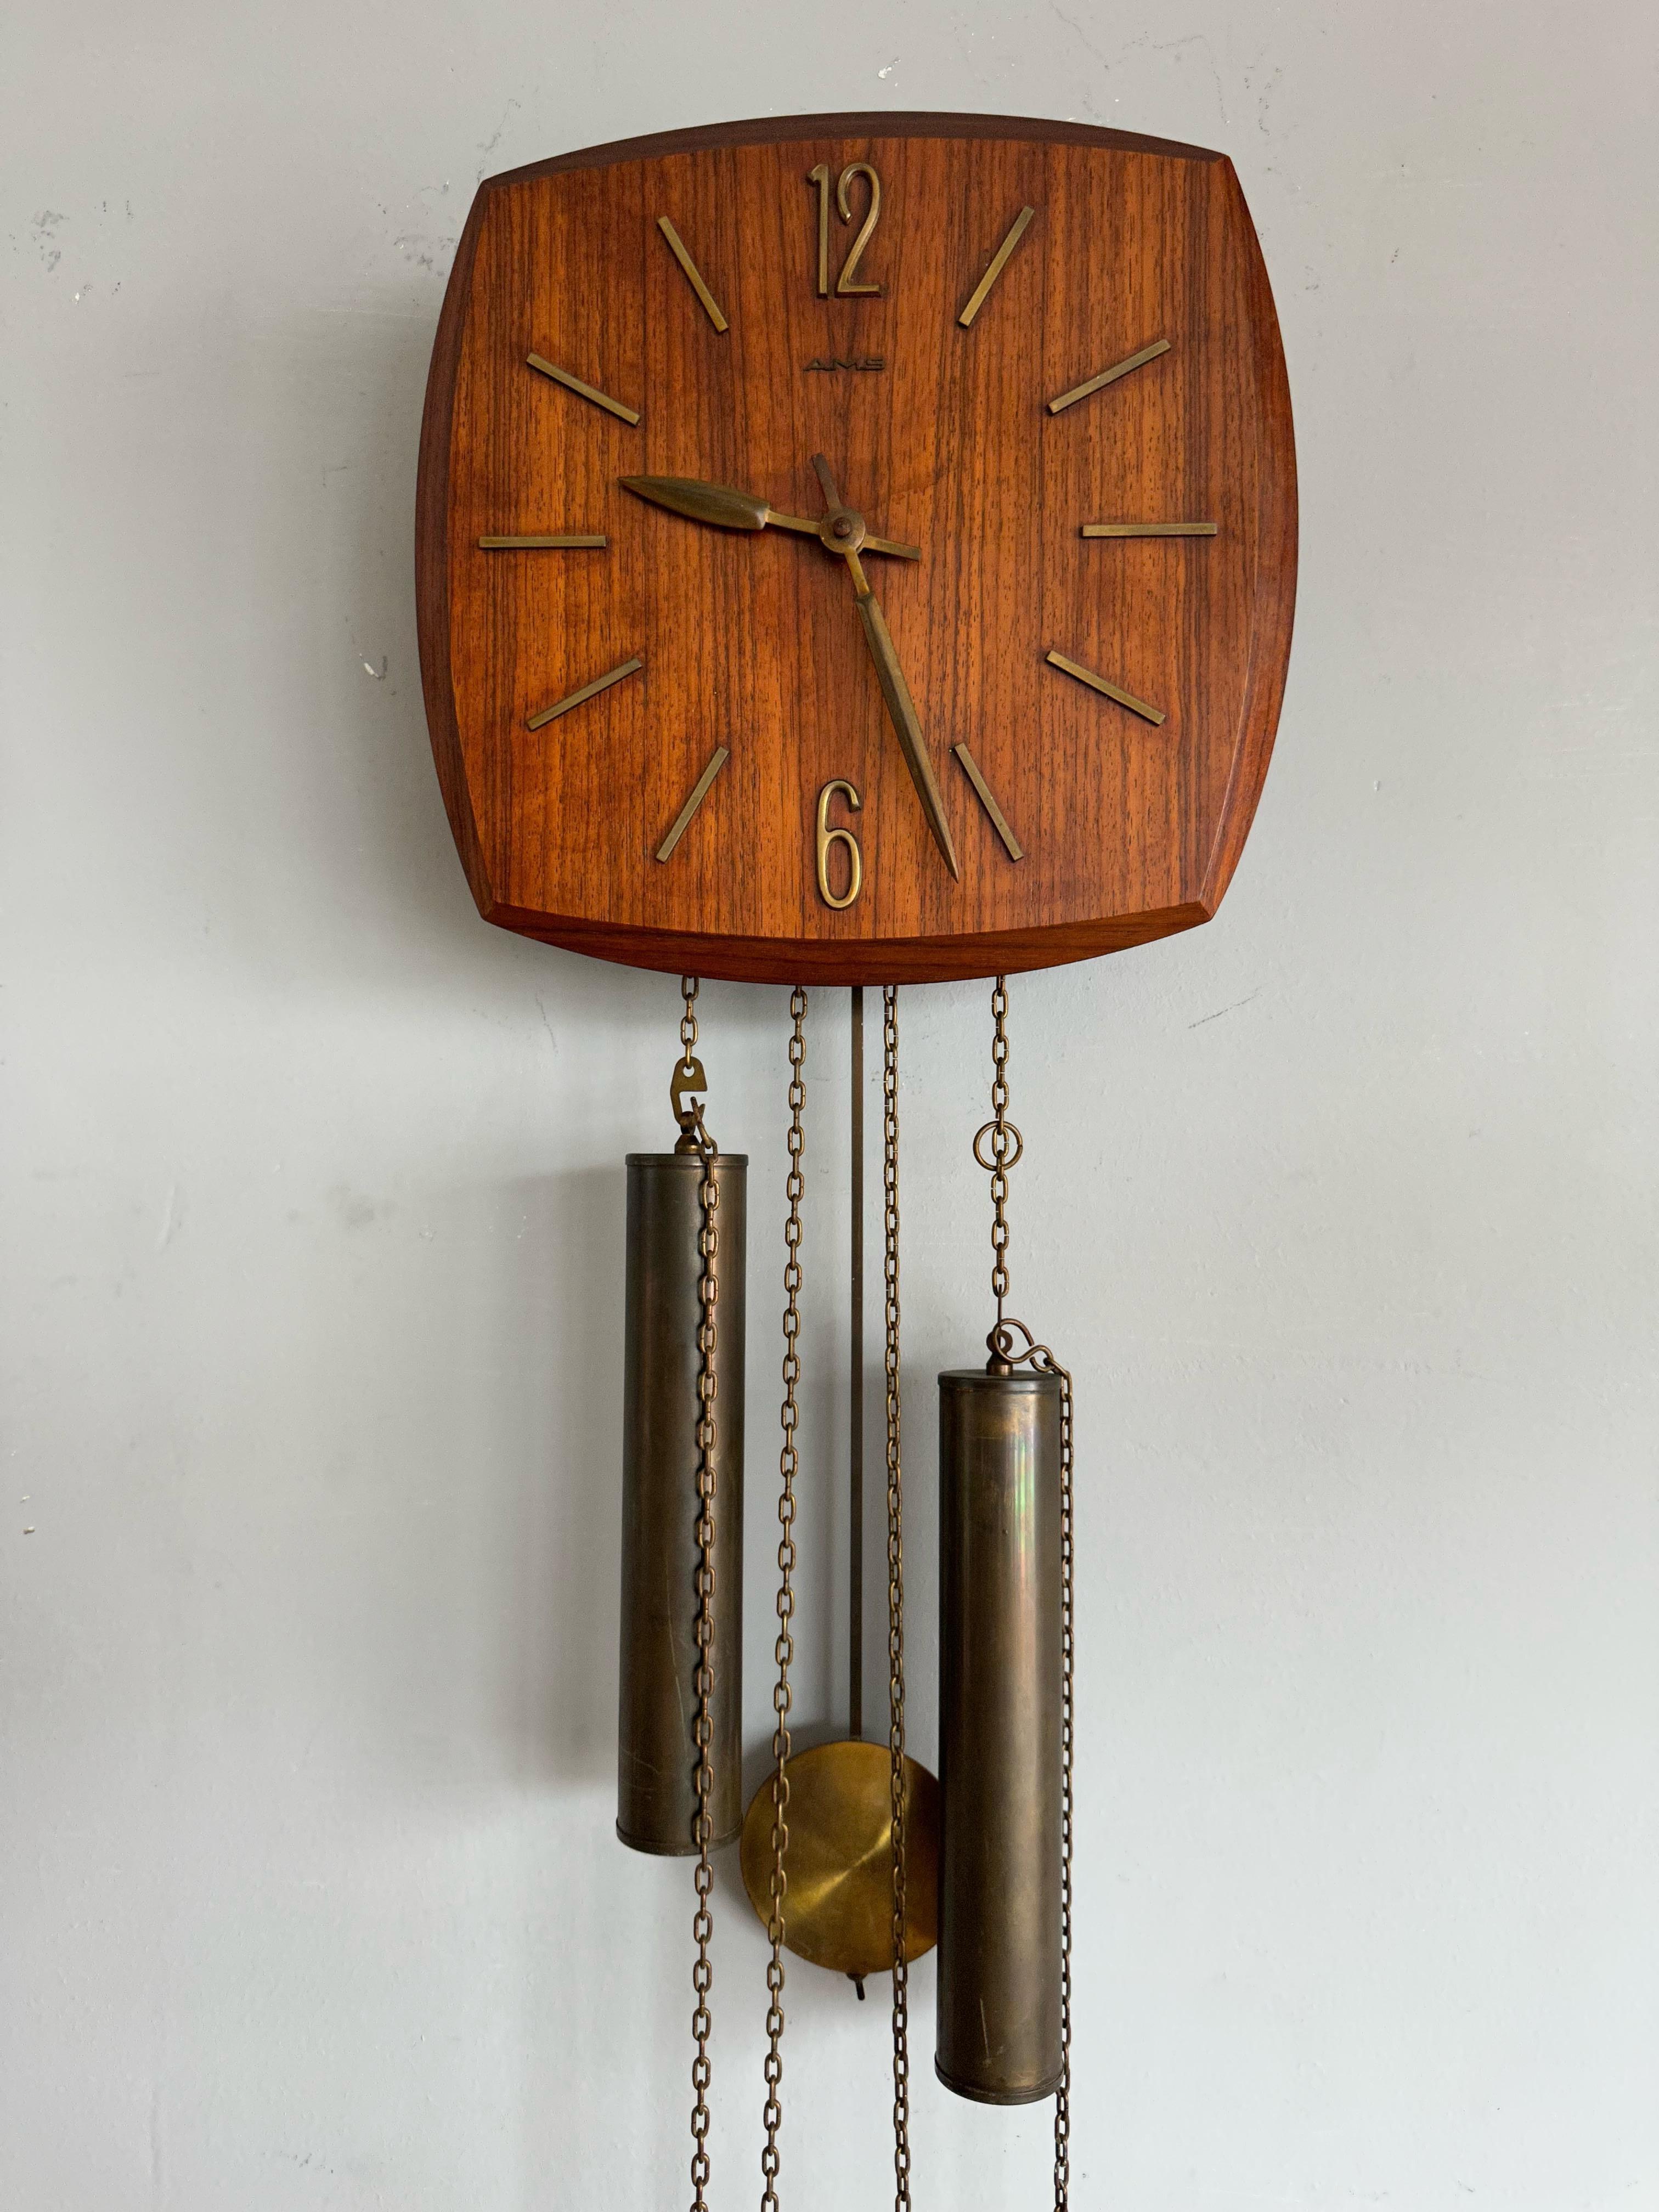 20th Century Beautiful Midcentury Danish Teak Wood Pendulum Wall Clock, Great Condition 1960s